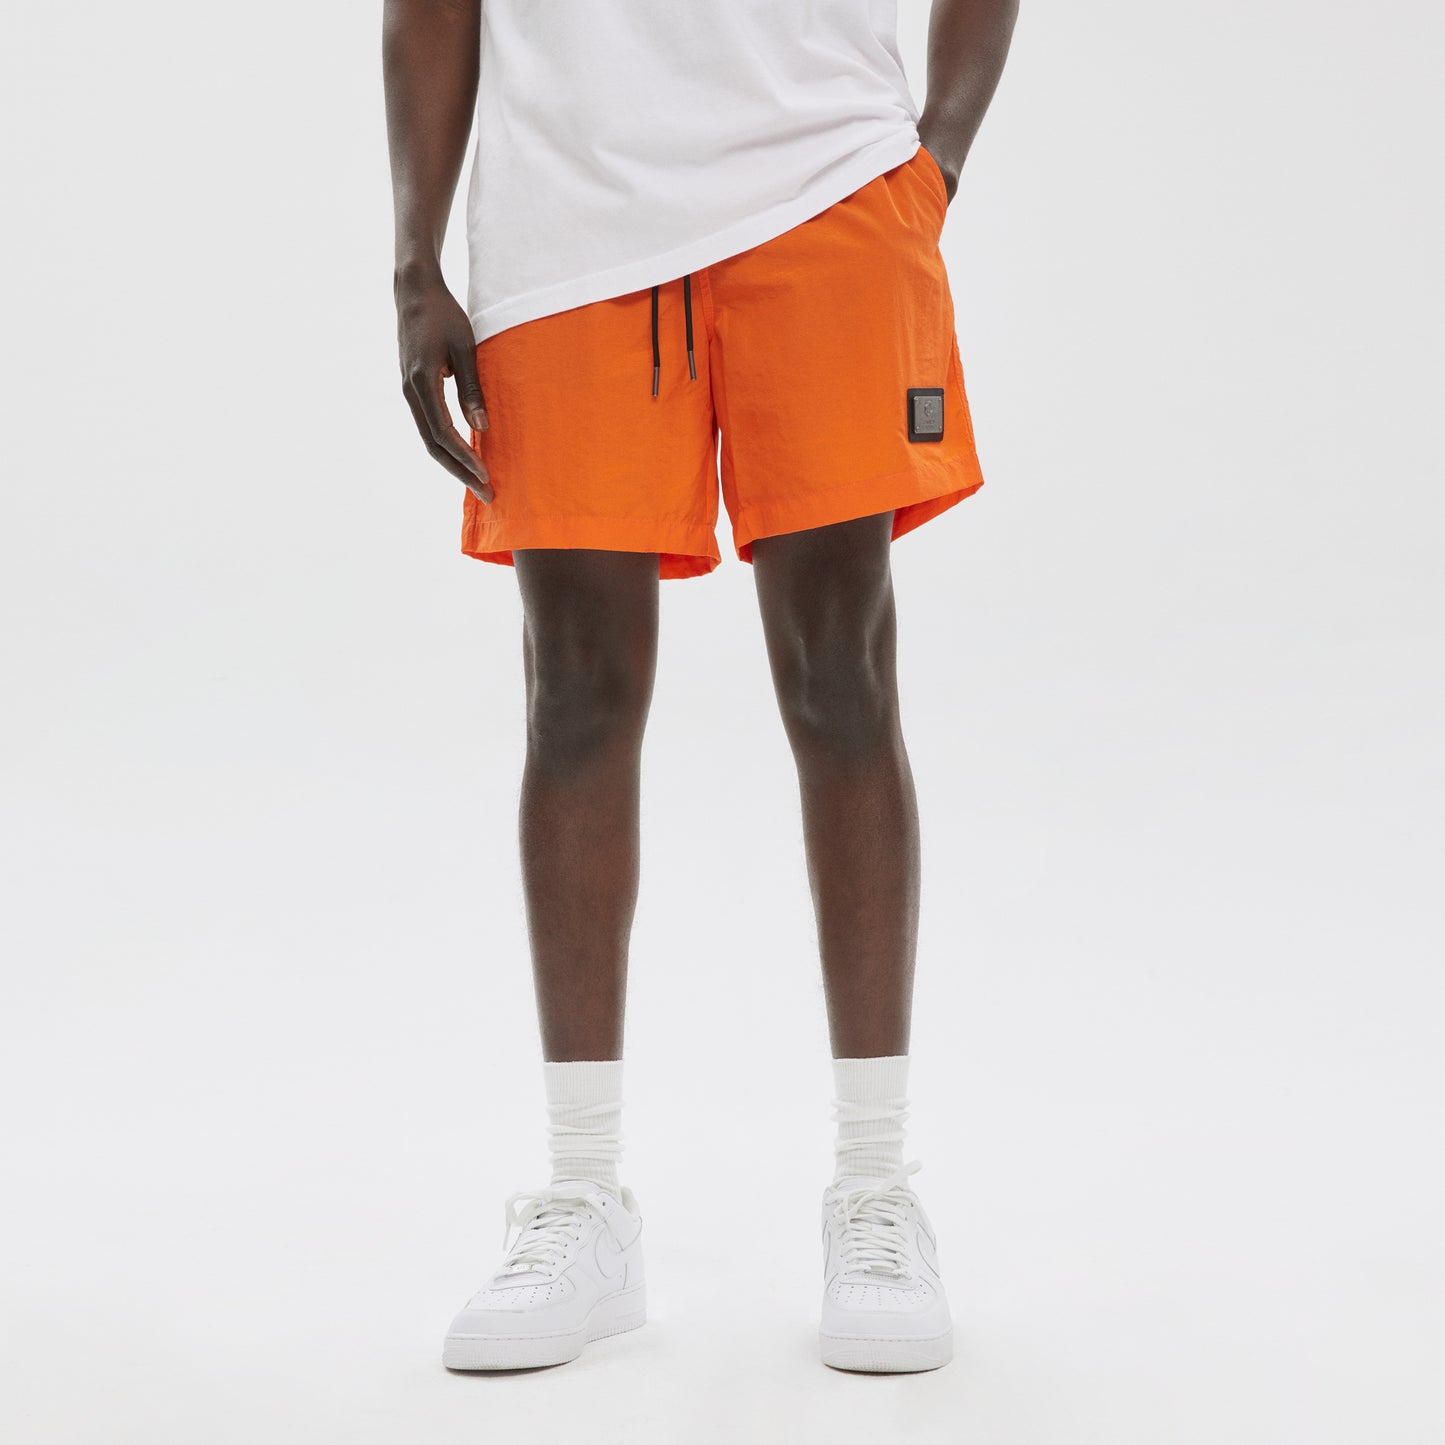 Concepts Home Plate Shorts (Orange)